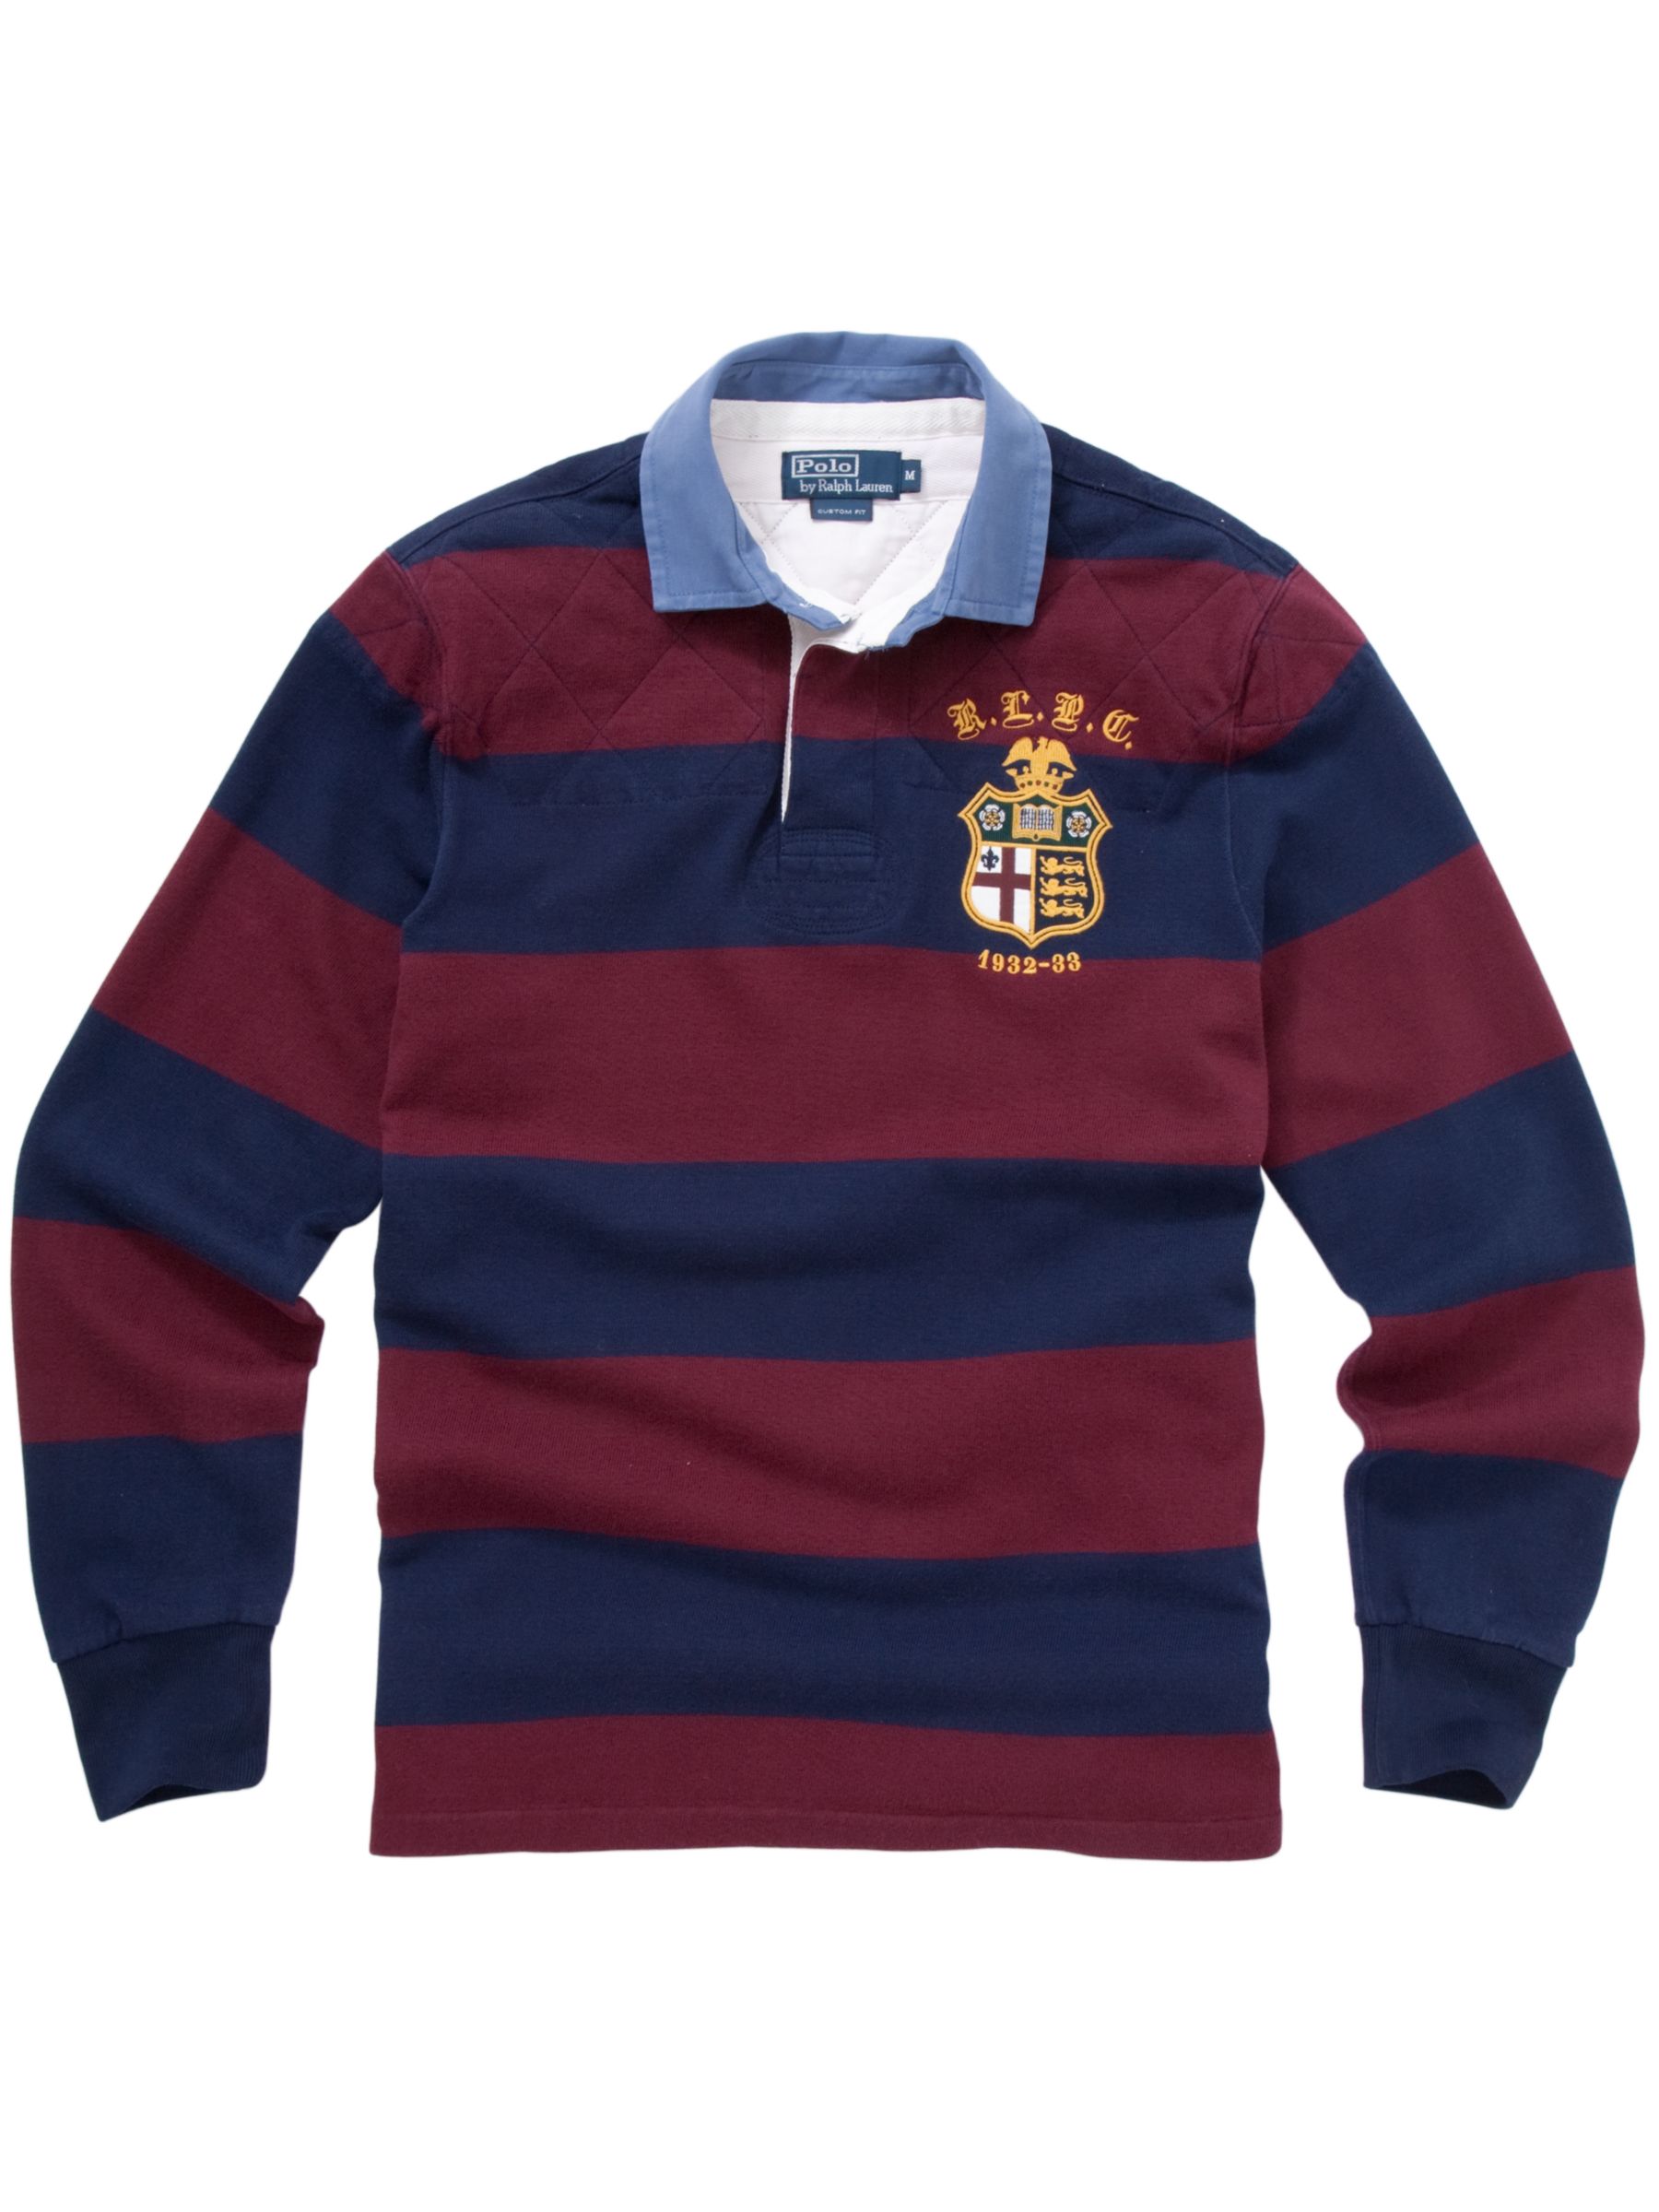 Polo Ralph Lauren Stripe Rugby Shirt, Cruise